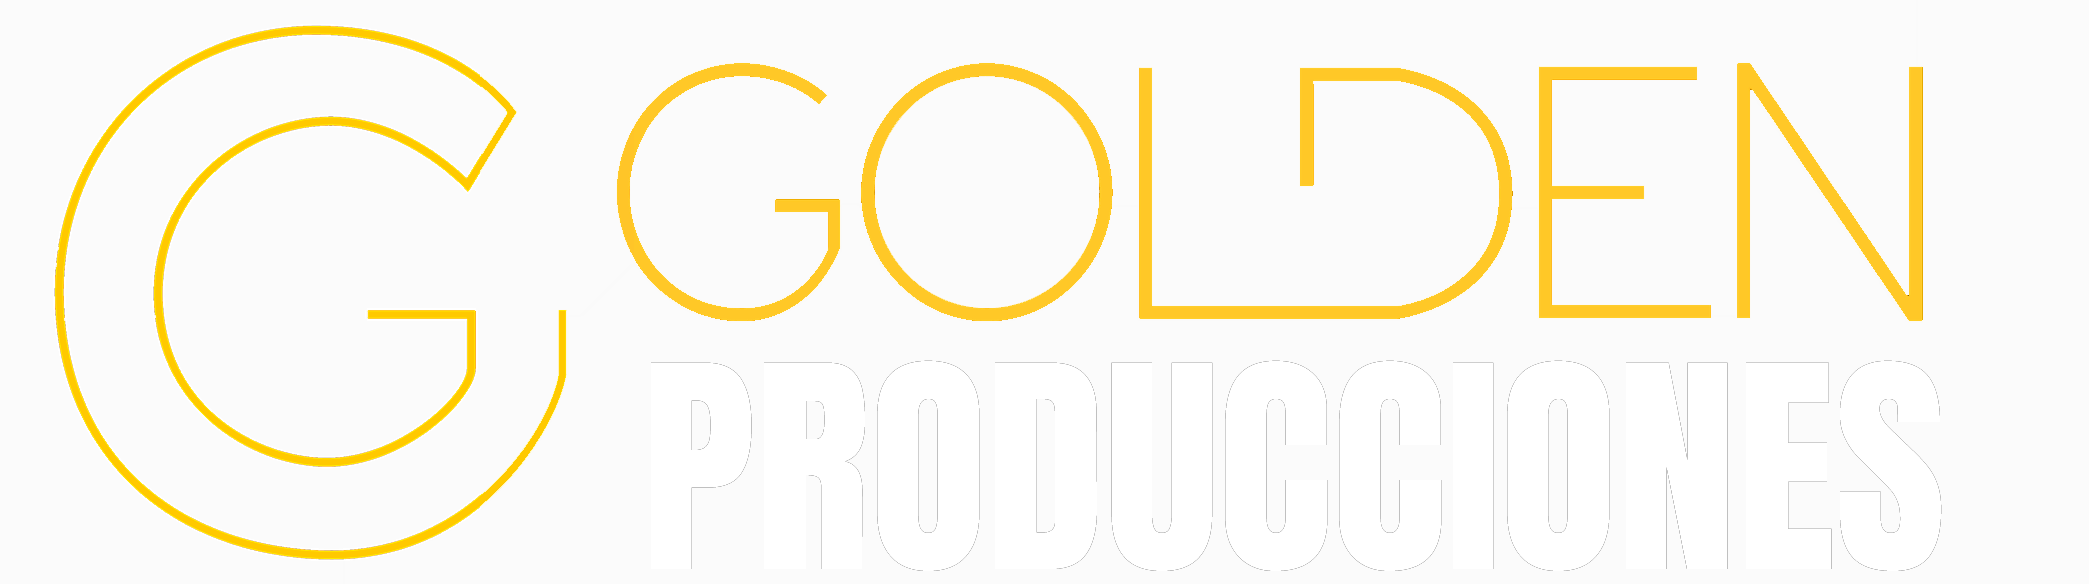 GOLDEN PRODUCCIONES HORIZONTAL 2